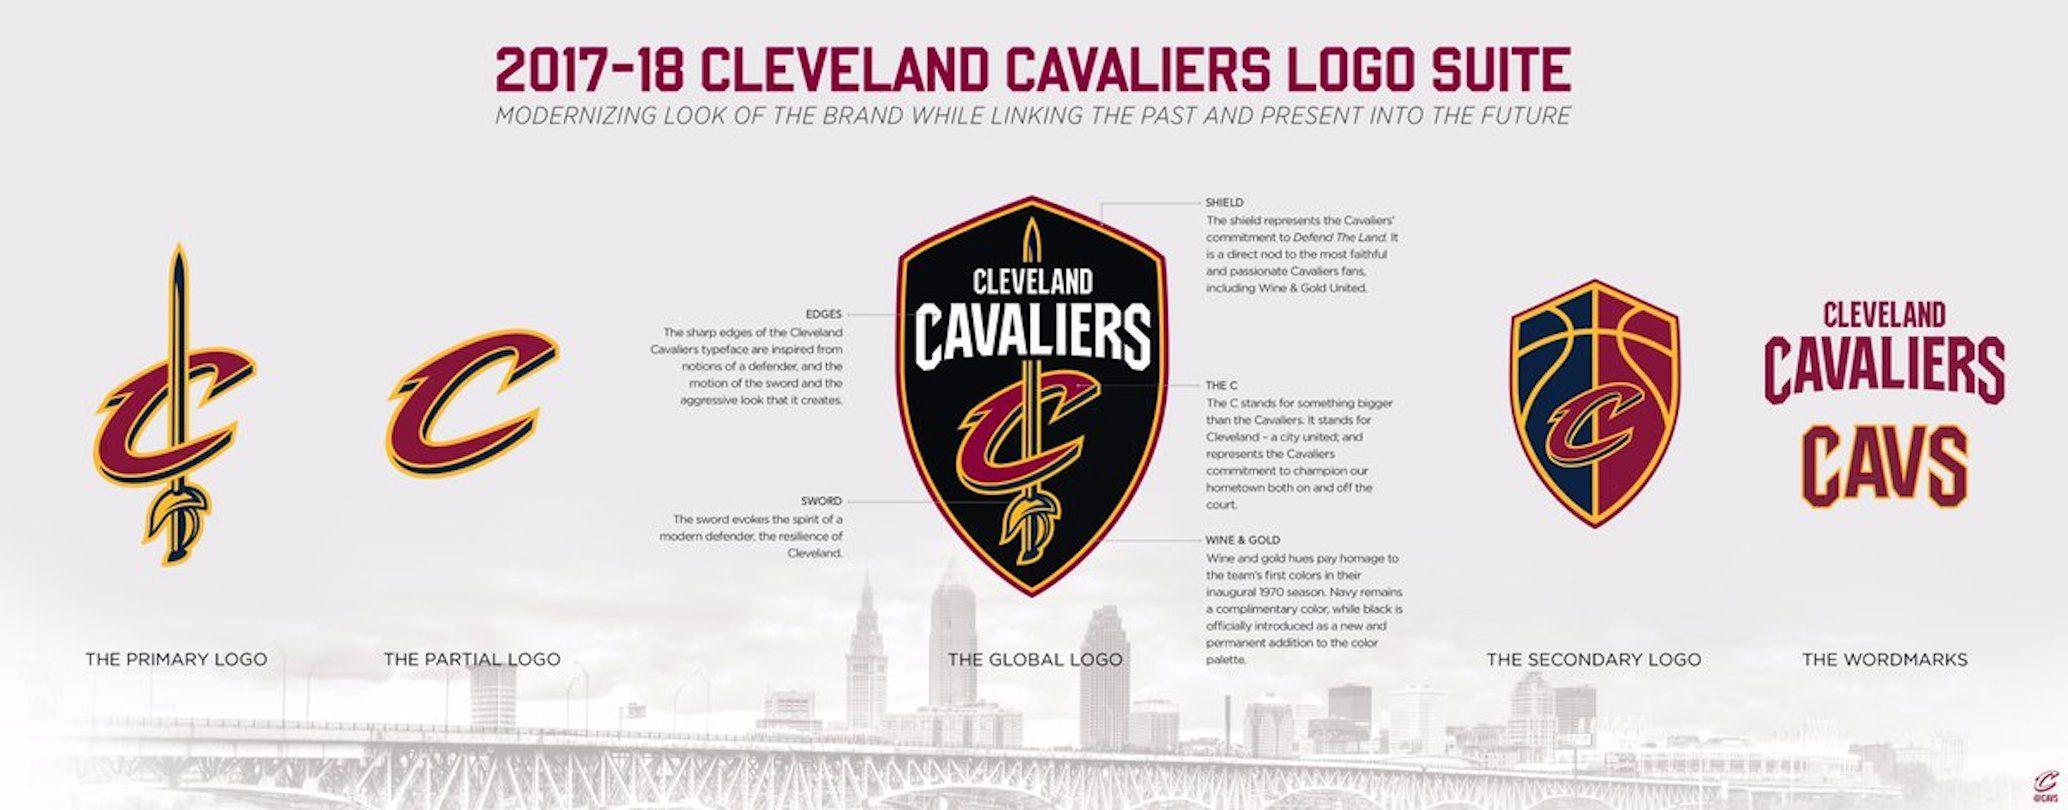 Cavs C Logo - New Cavs Logo Includes 'Warriors Blew 3 1 Lead' Trolling